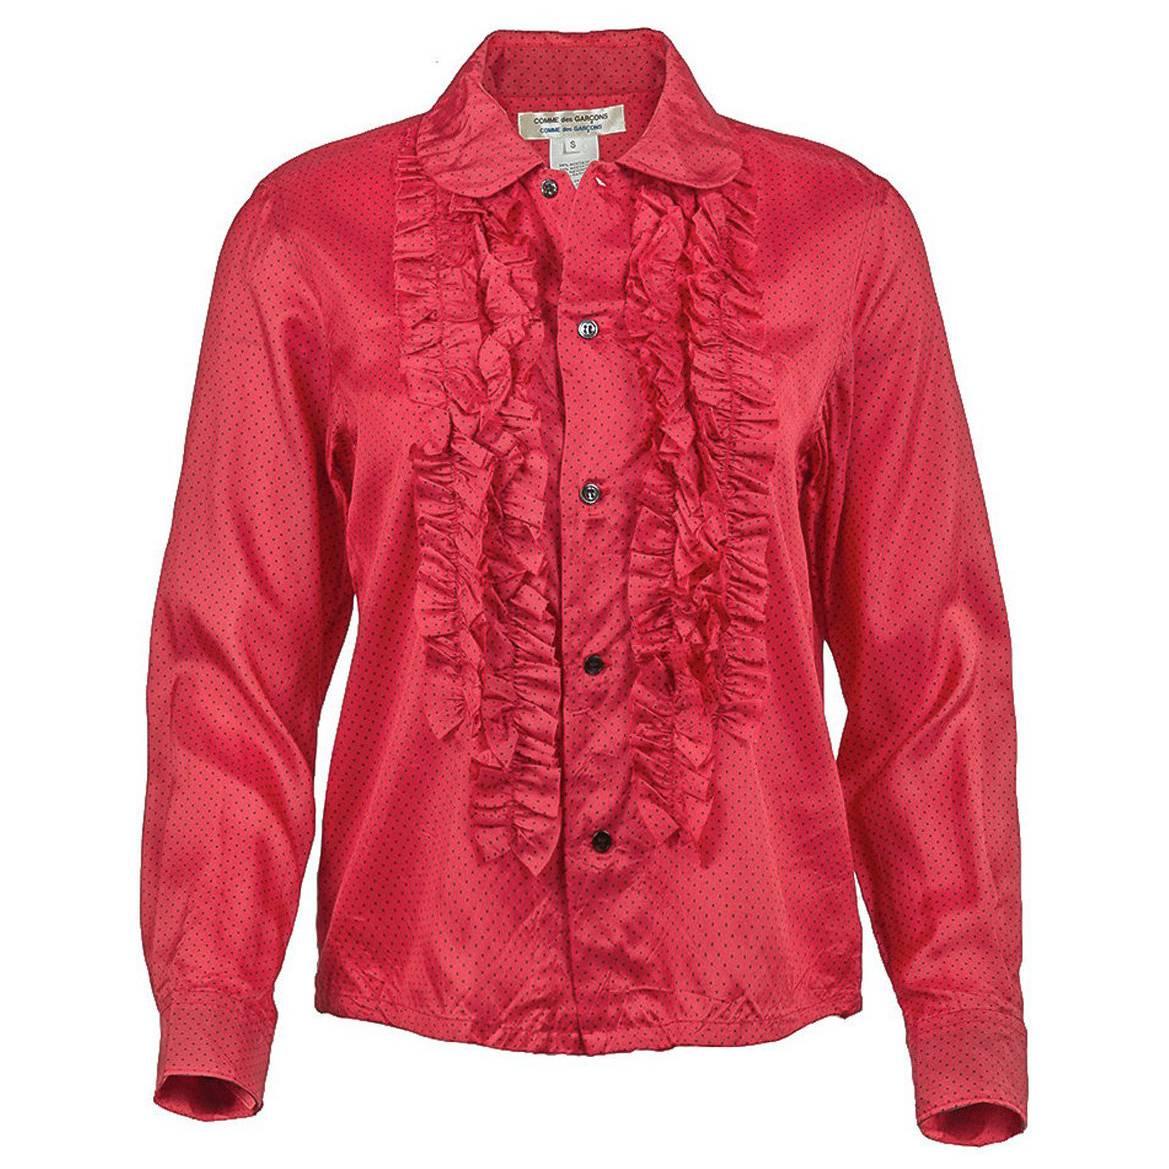 Comme des Garçons Red Ruffled Shirt with Dots